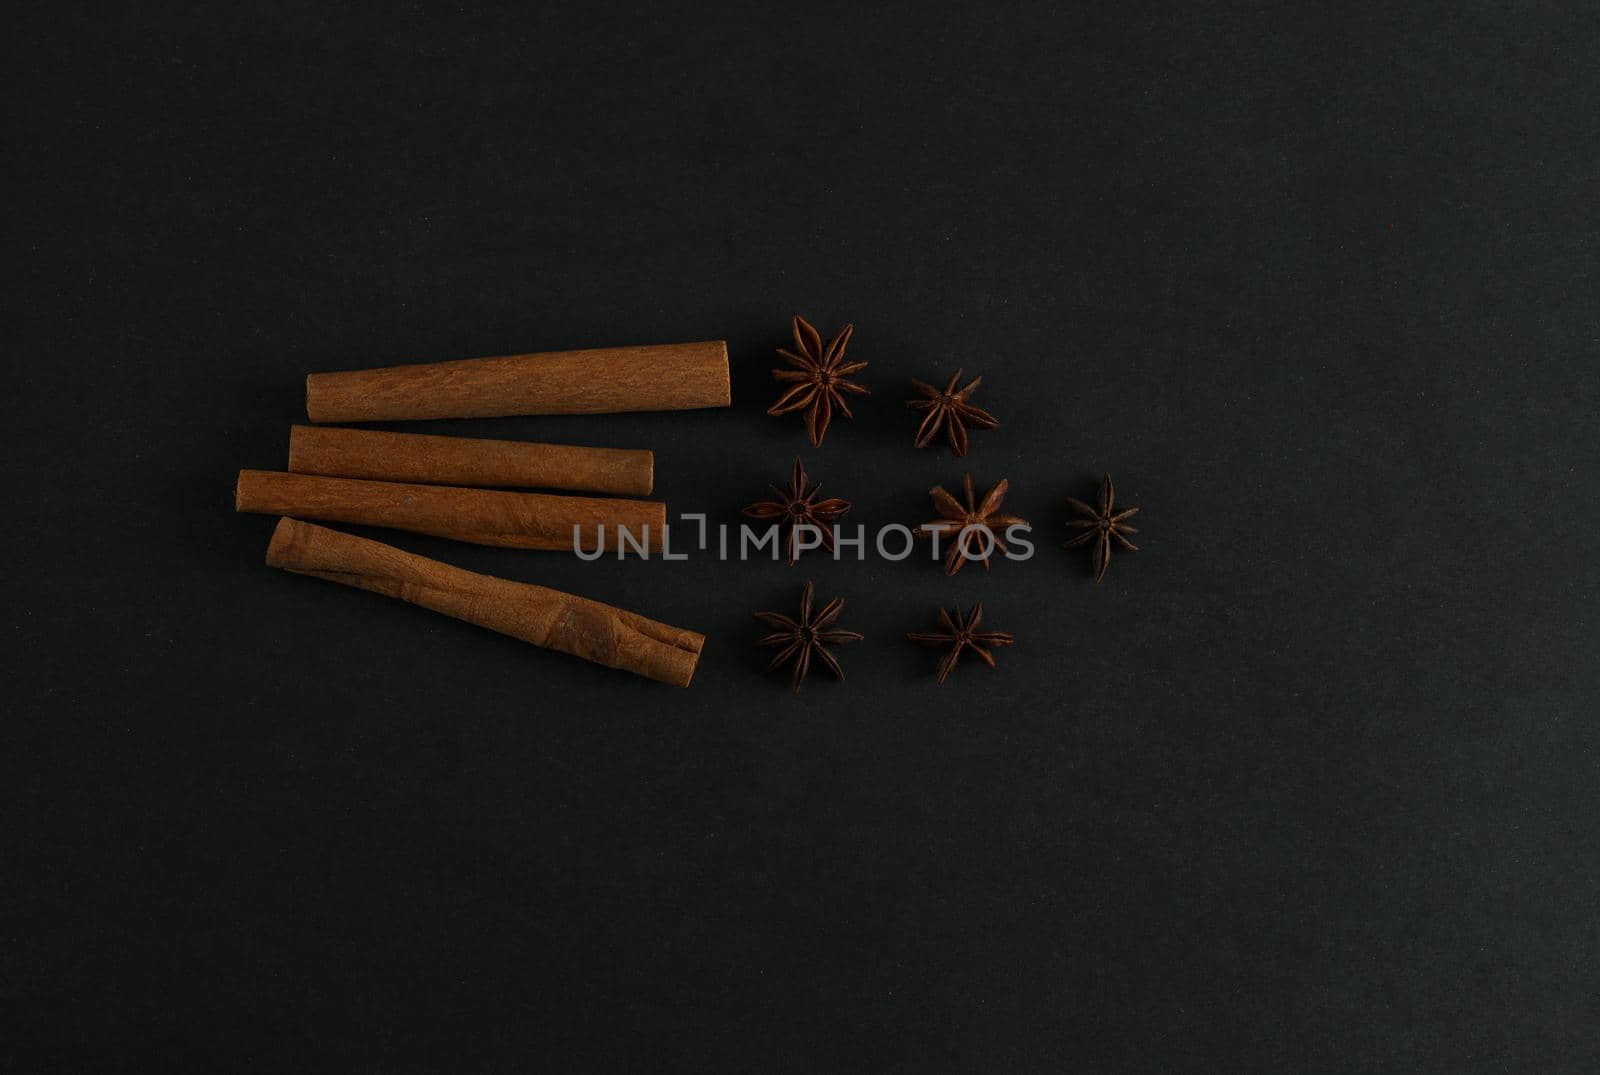 Four big cinnamon sticks and anise stars flatlay on black background